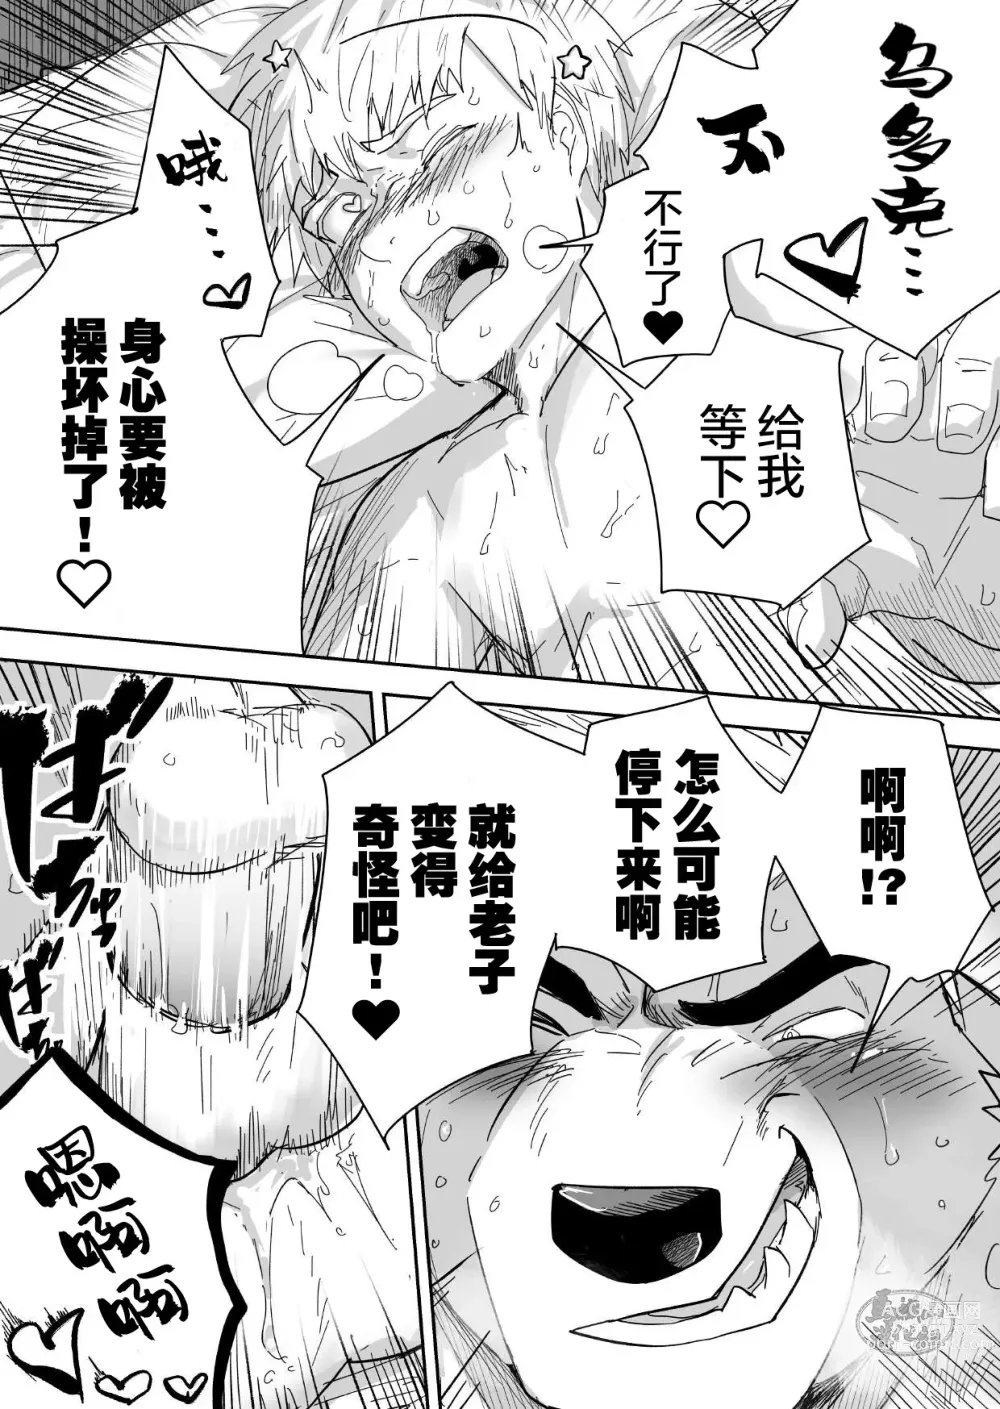 Page 29 of doujinshi Aibou Gachimuchi Kemonohito Senshi to Aibou Ijou ni Naru Hanashi｜ 当伙伴是强壮兽人战士之后和他超越友谊的故事